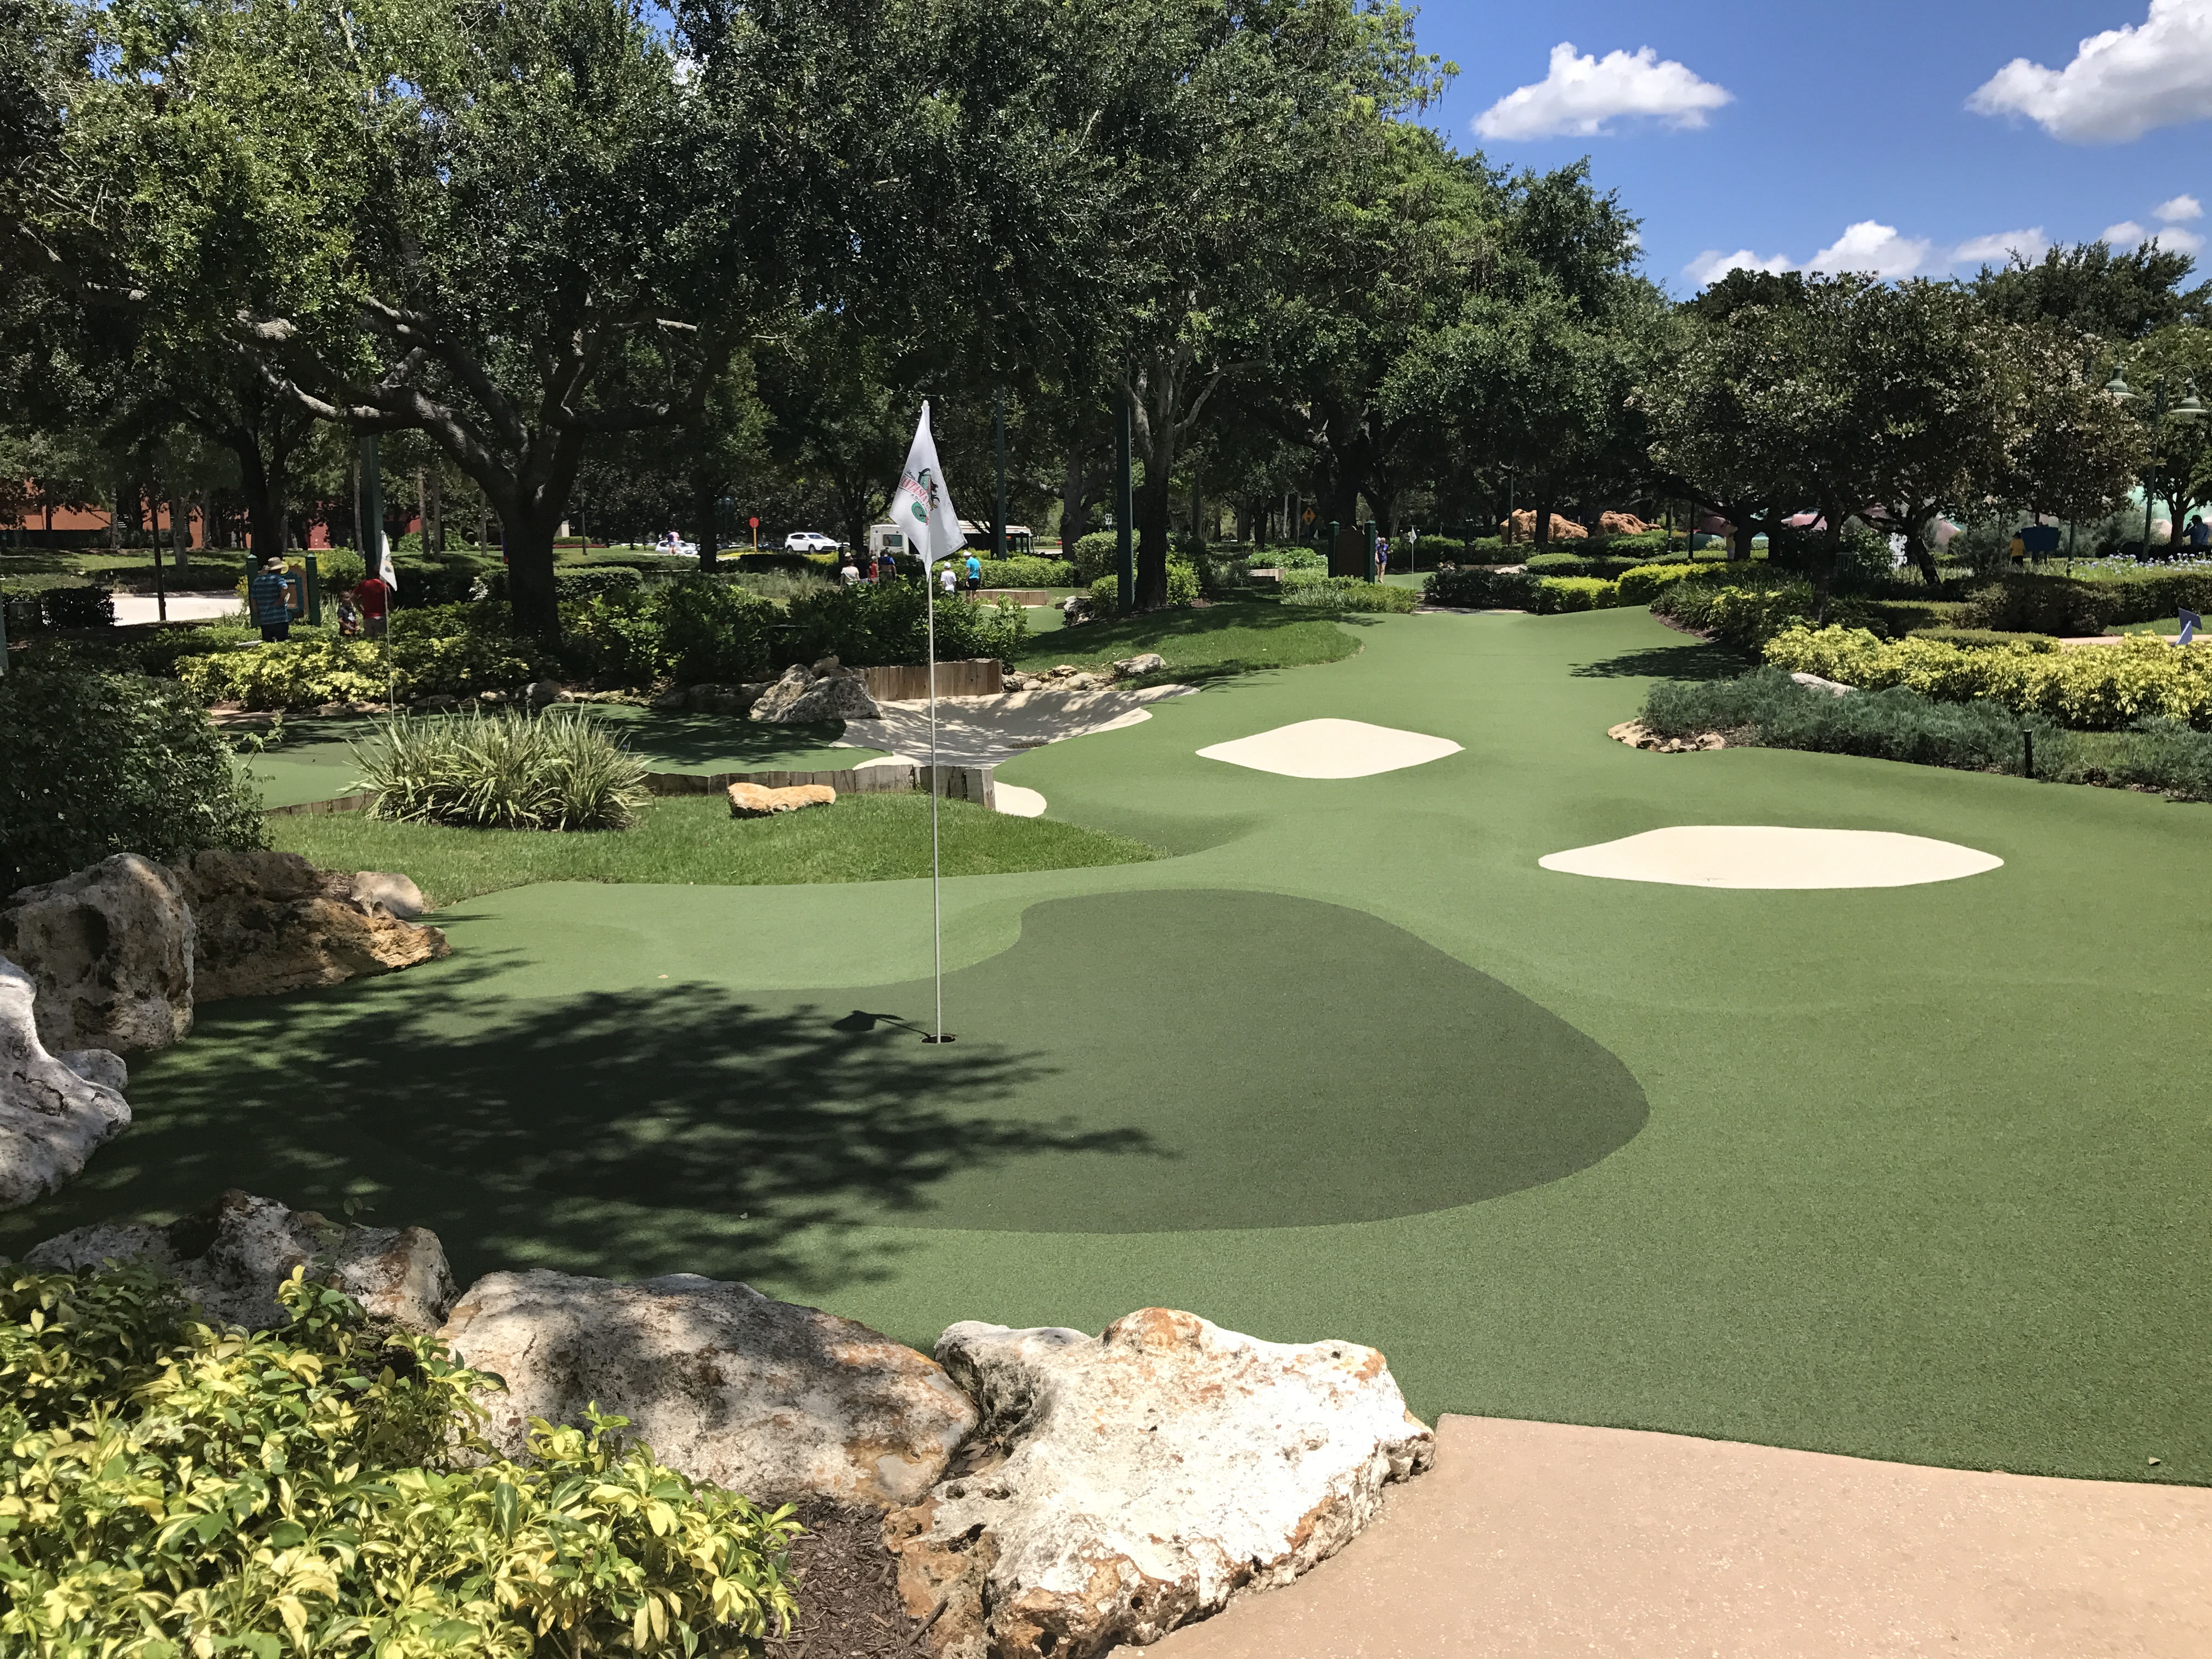 Fantasia Gardens Mini Golf Wdw Florida David S Coin Travels